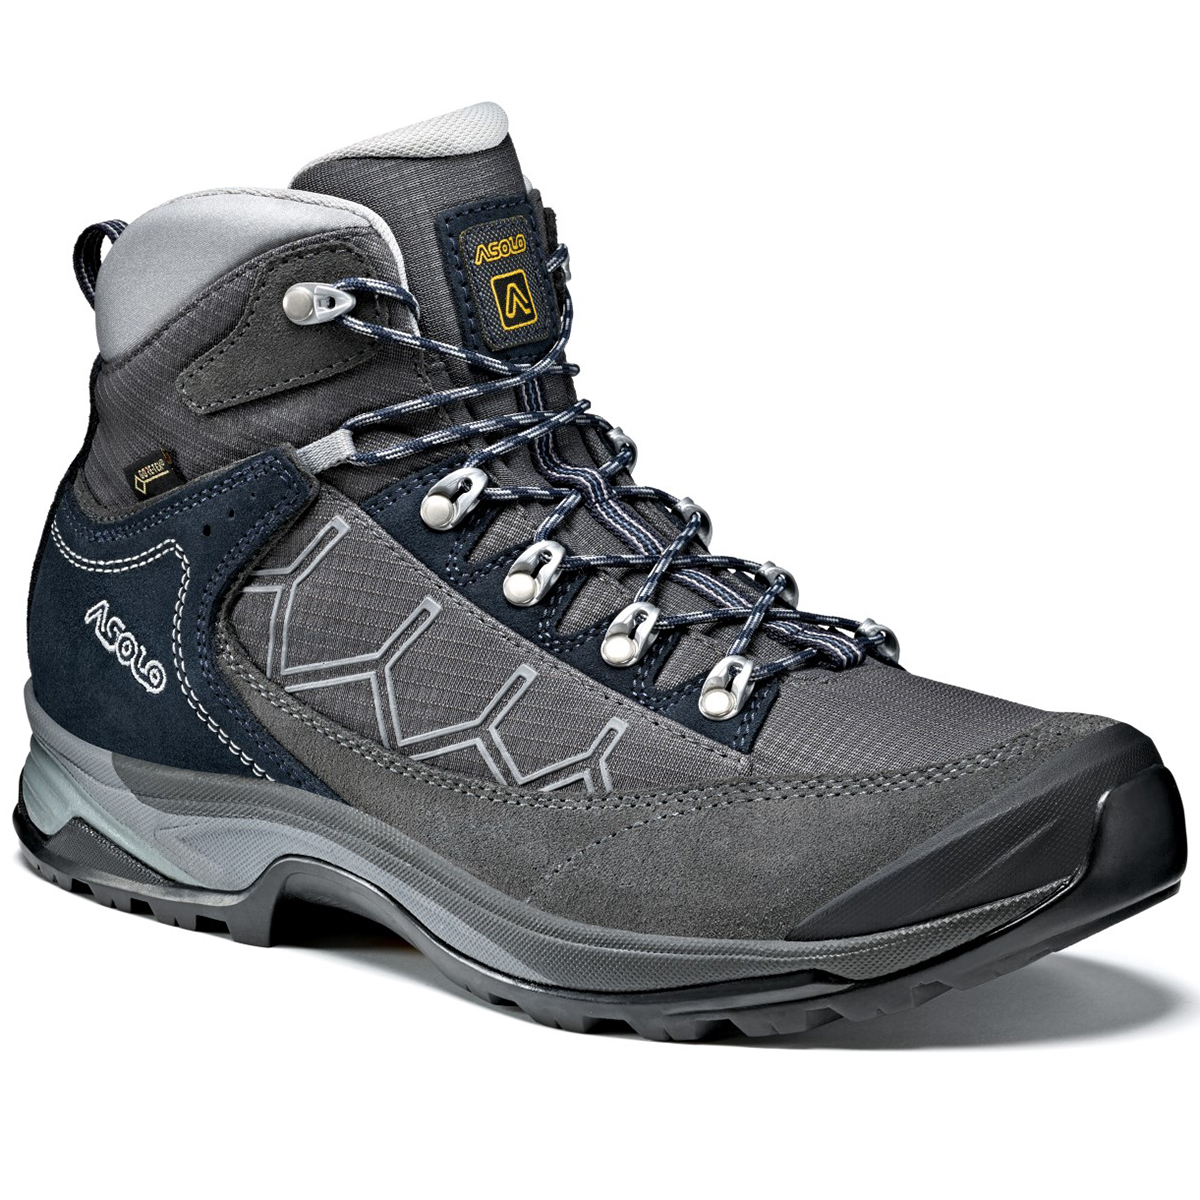 Asolo Men's Falcon Gv Mid Waterproof Hiking Boots - Black, 9